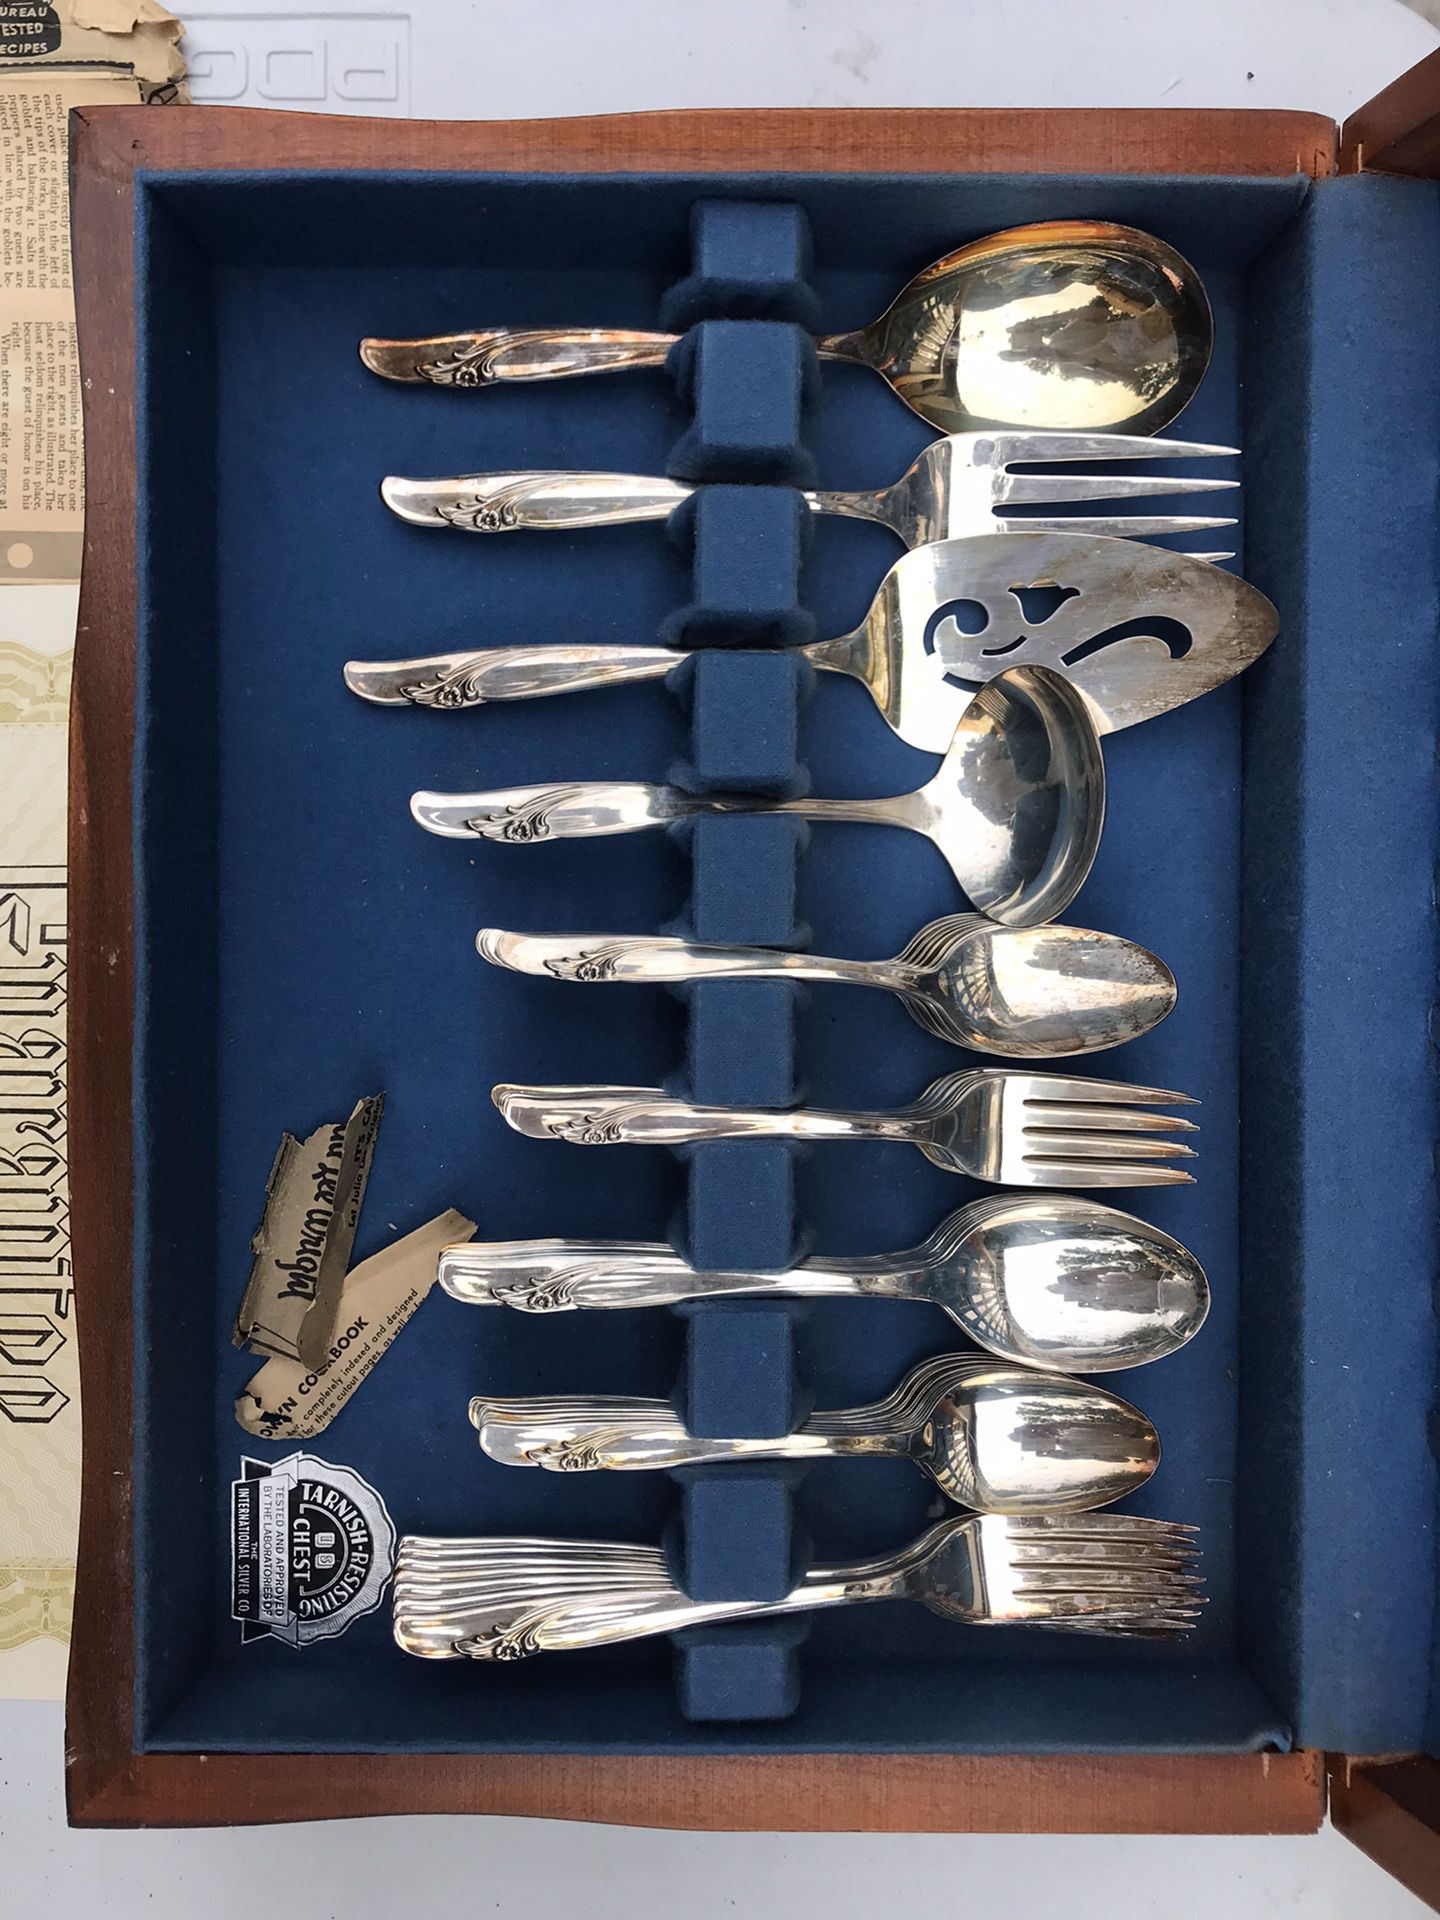 Plated silverware set